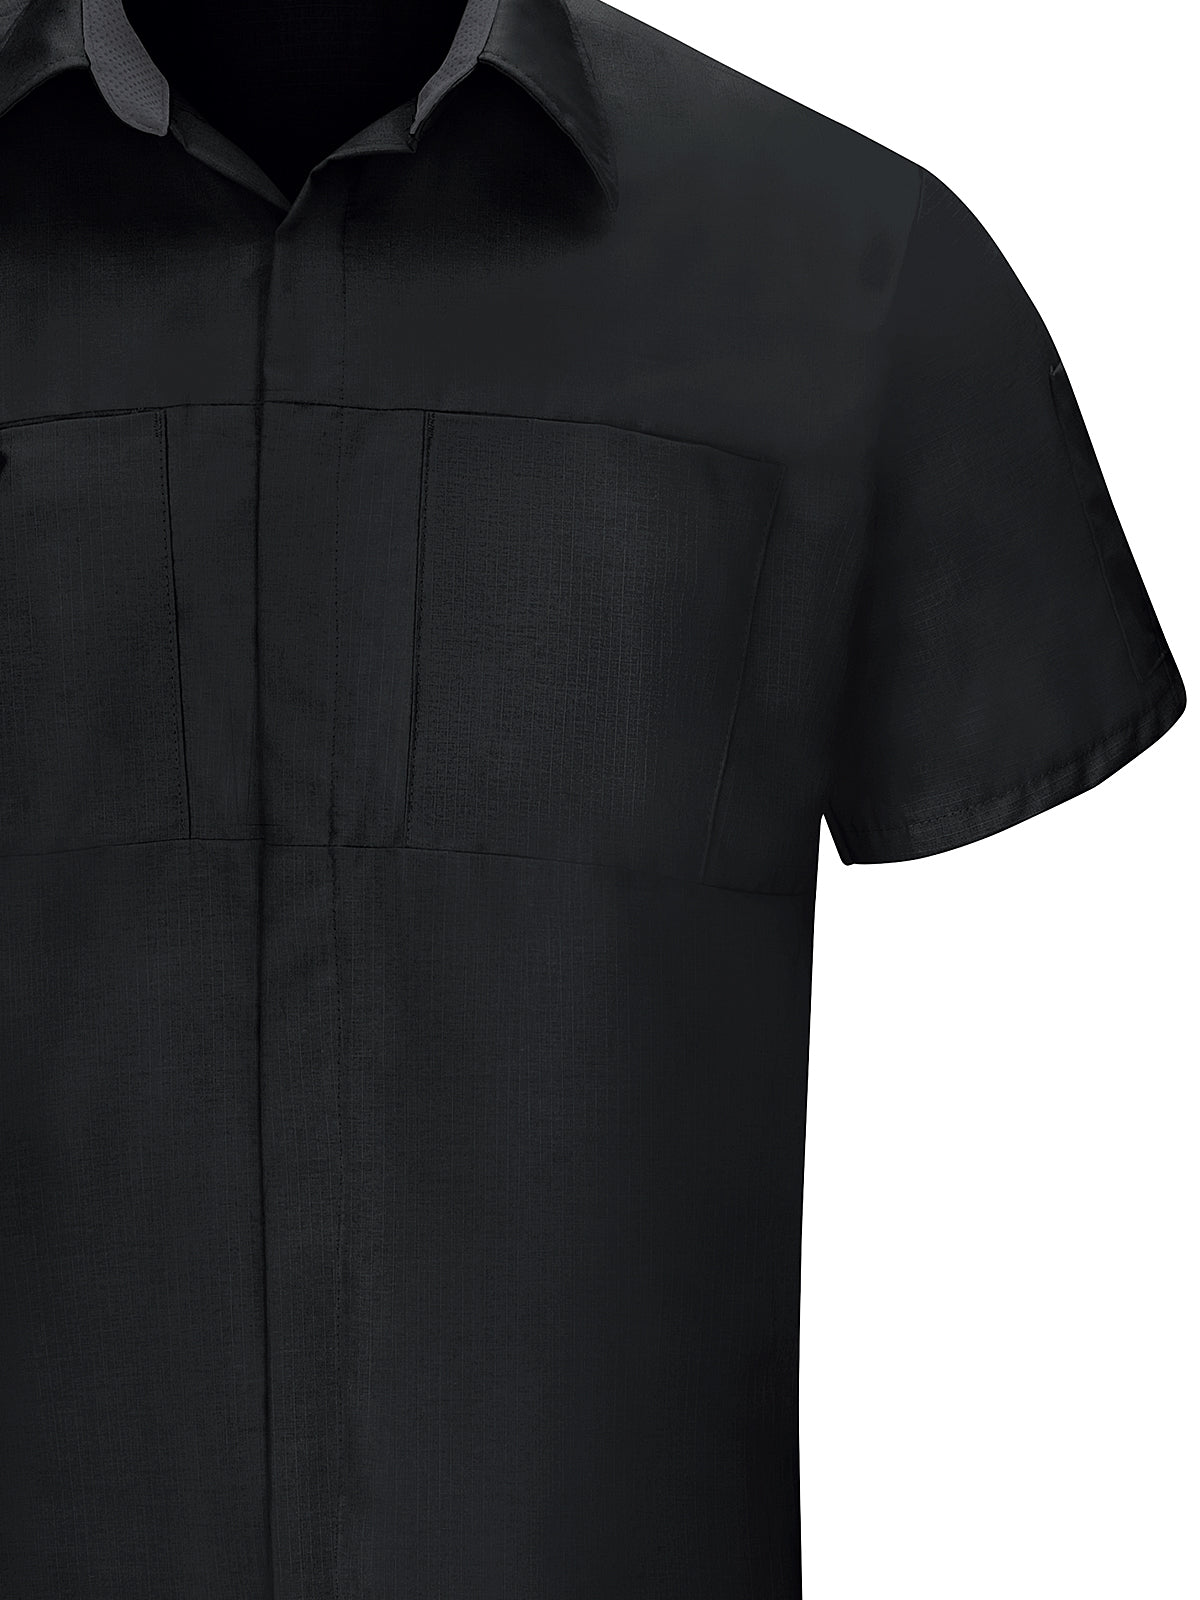 Men's Short Sleeve Performance Plus Shop Shirt